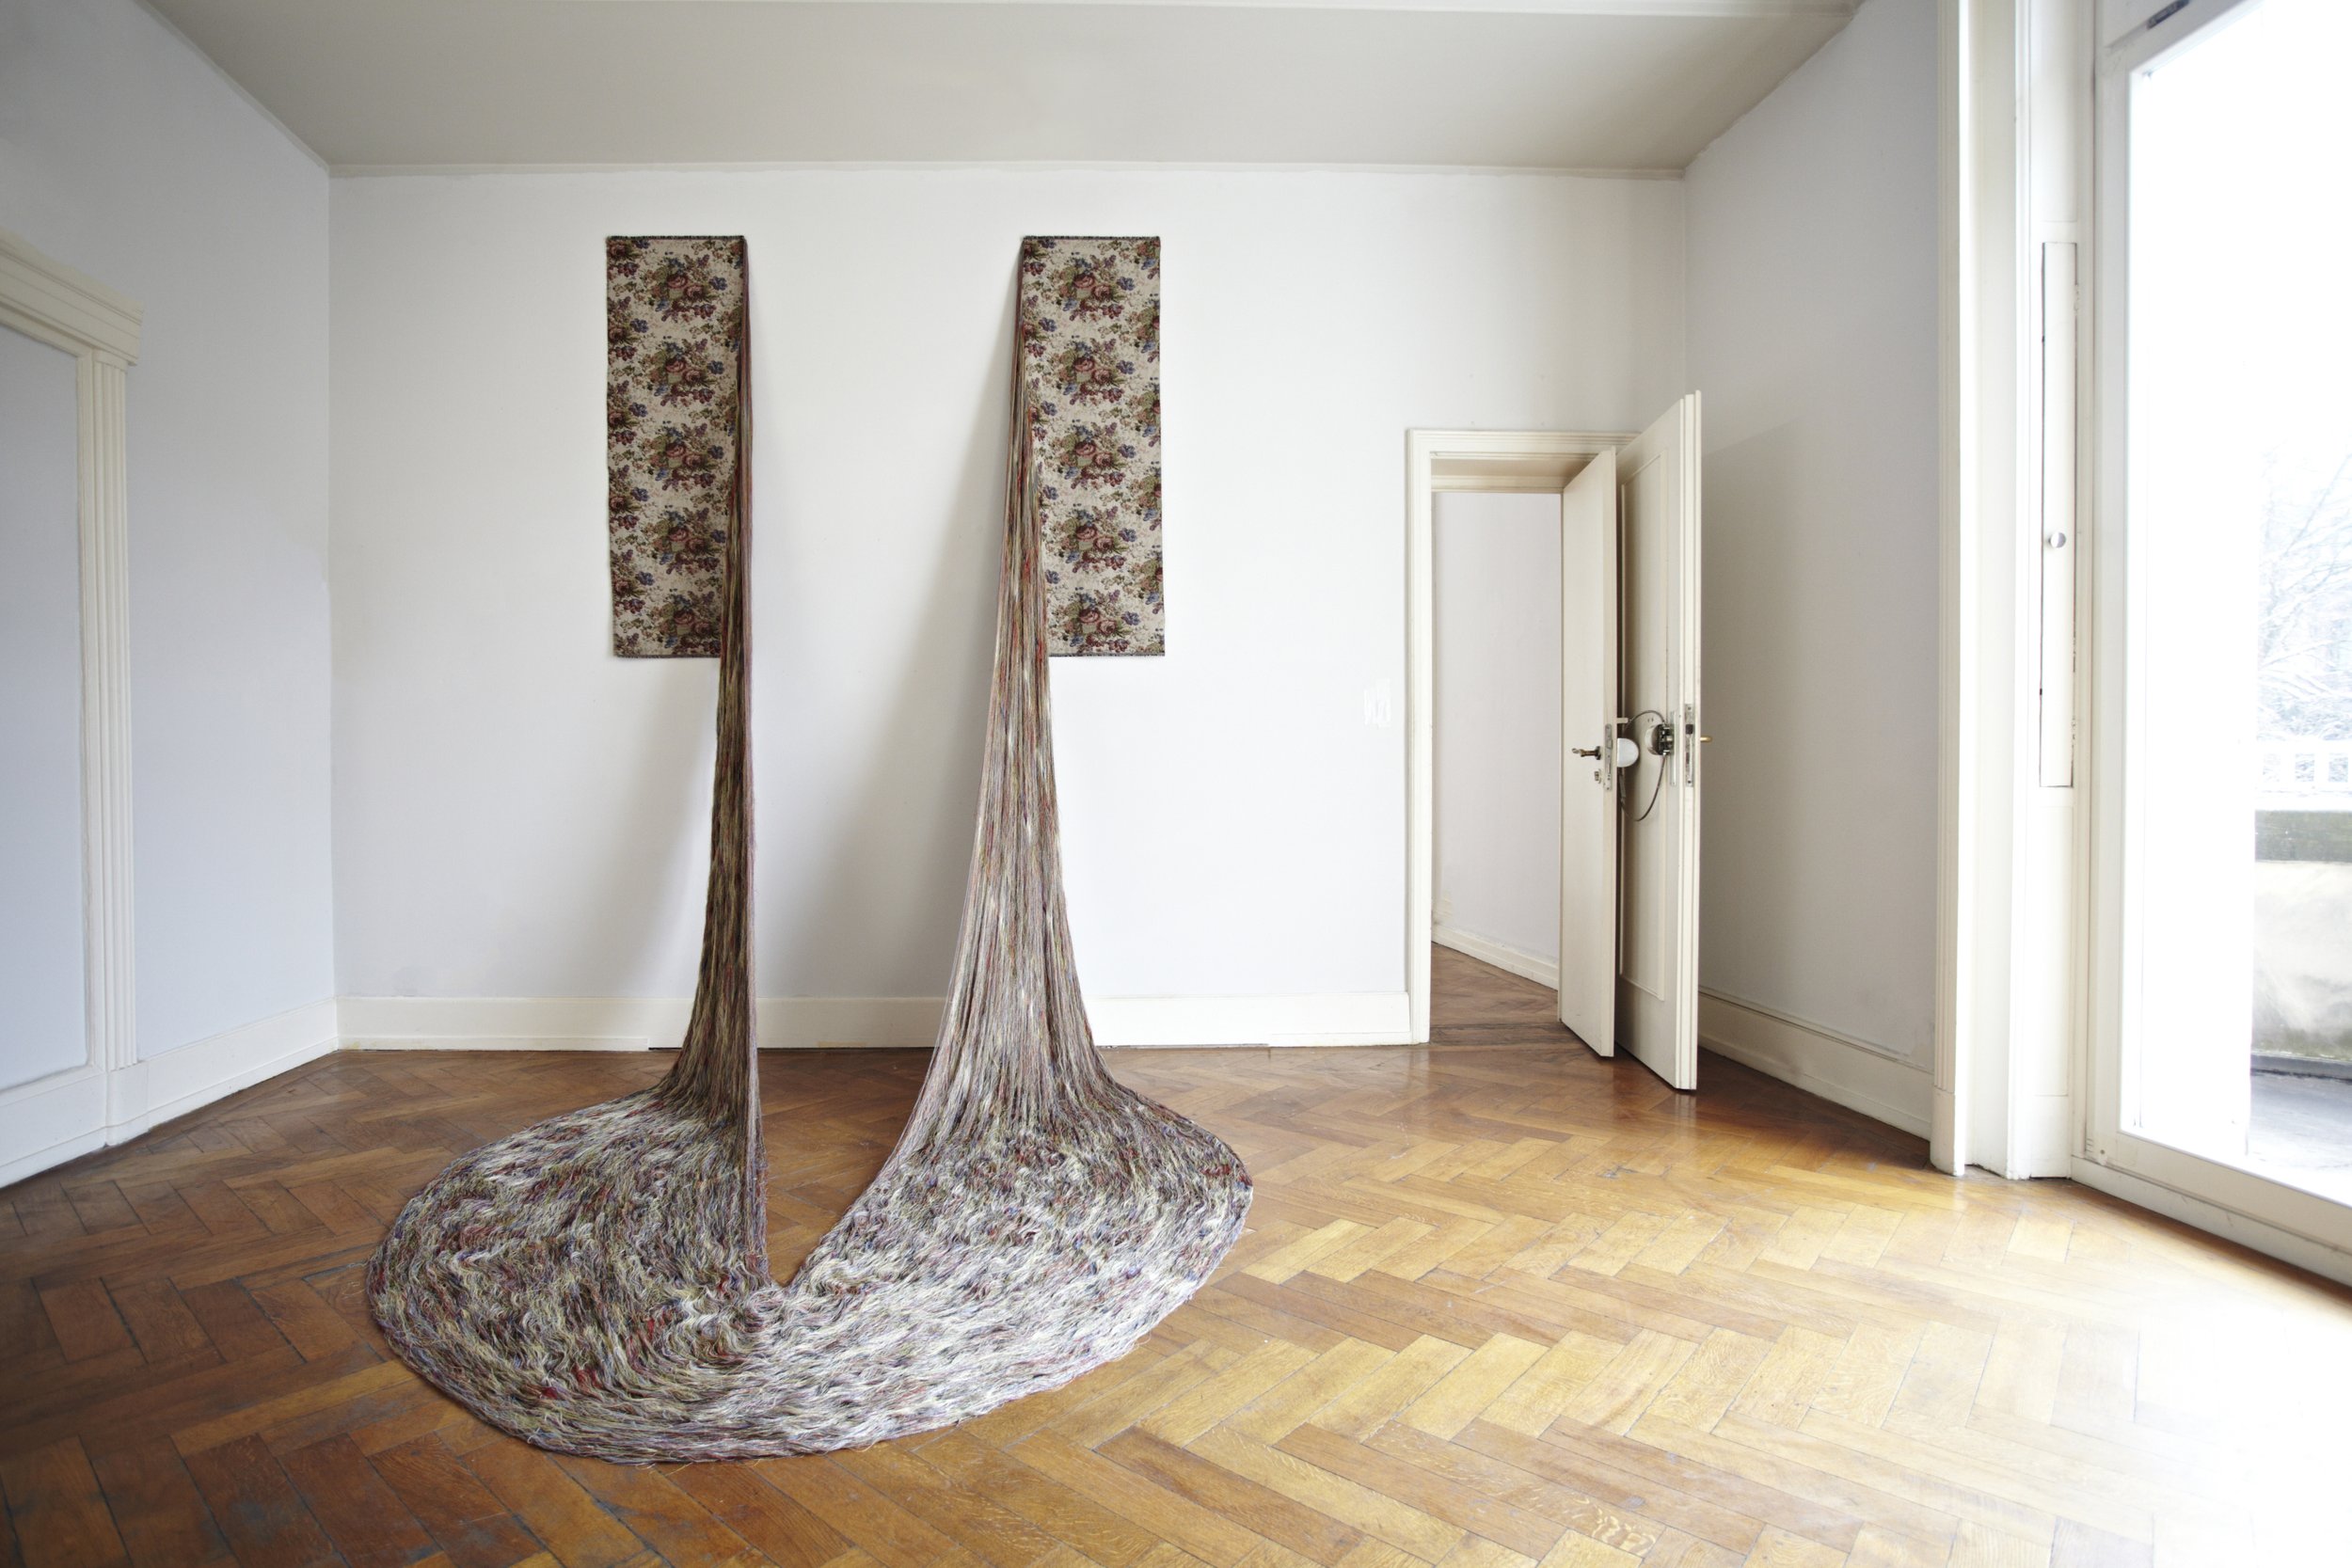 Aiko Tezuka, Loosening Fabric #2, 2013. Photo by Jens Steingässer